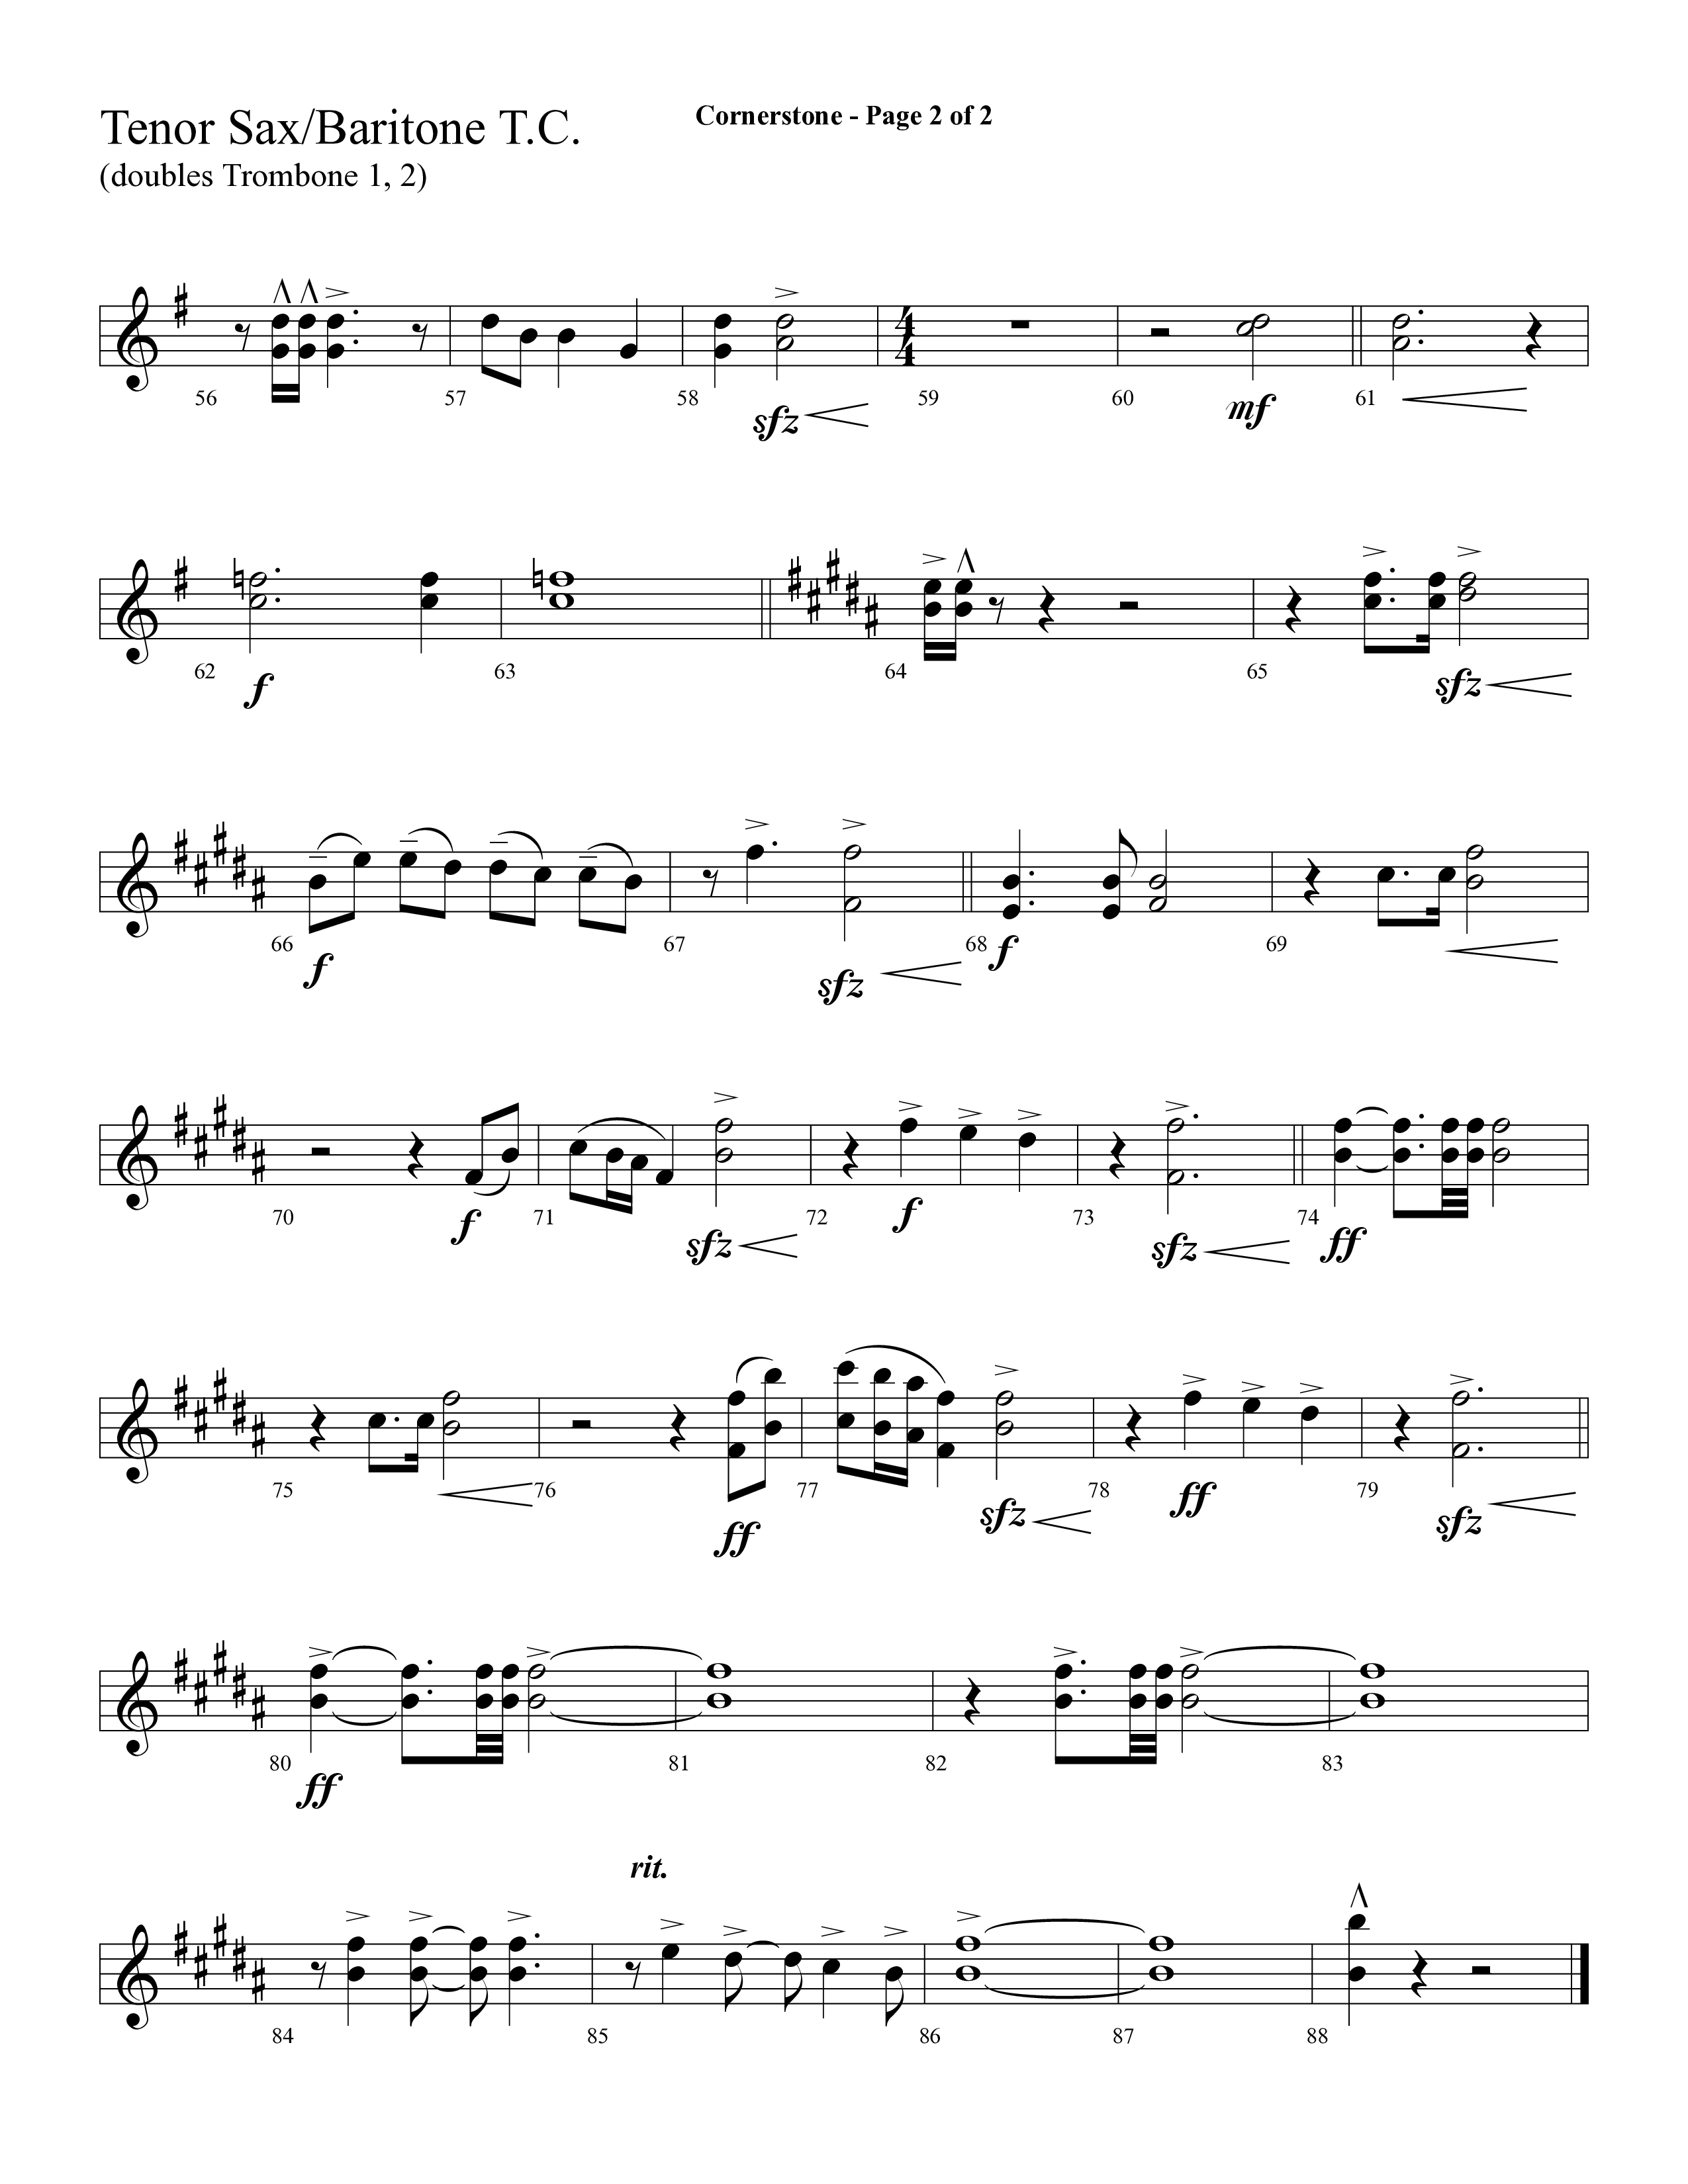 Cornerstone (with The Solid Rock) (Choral Anthem SATB) Tenor Sax/Baritone T.C. (Lifeway Choral / Arr. Cliff Duren)